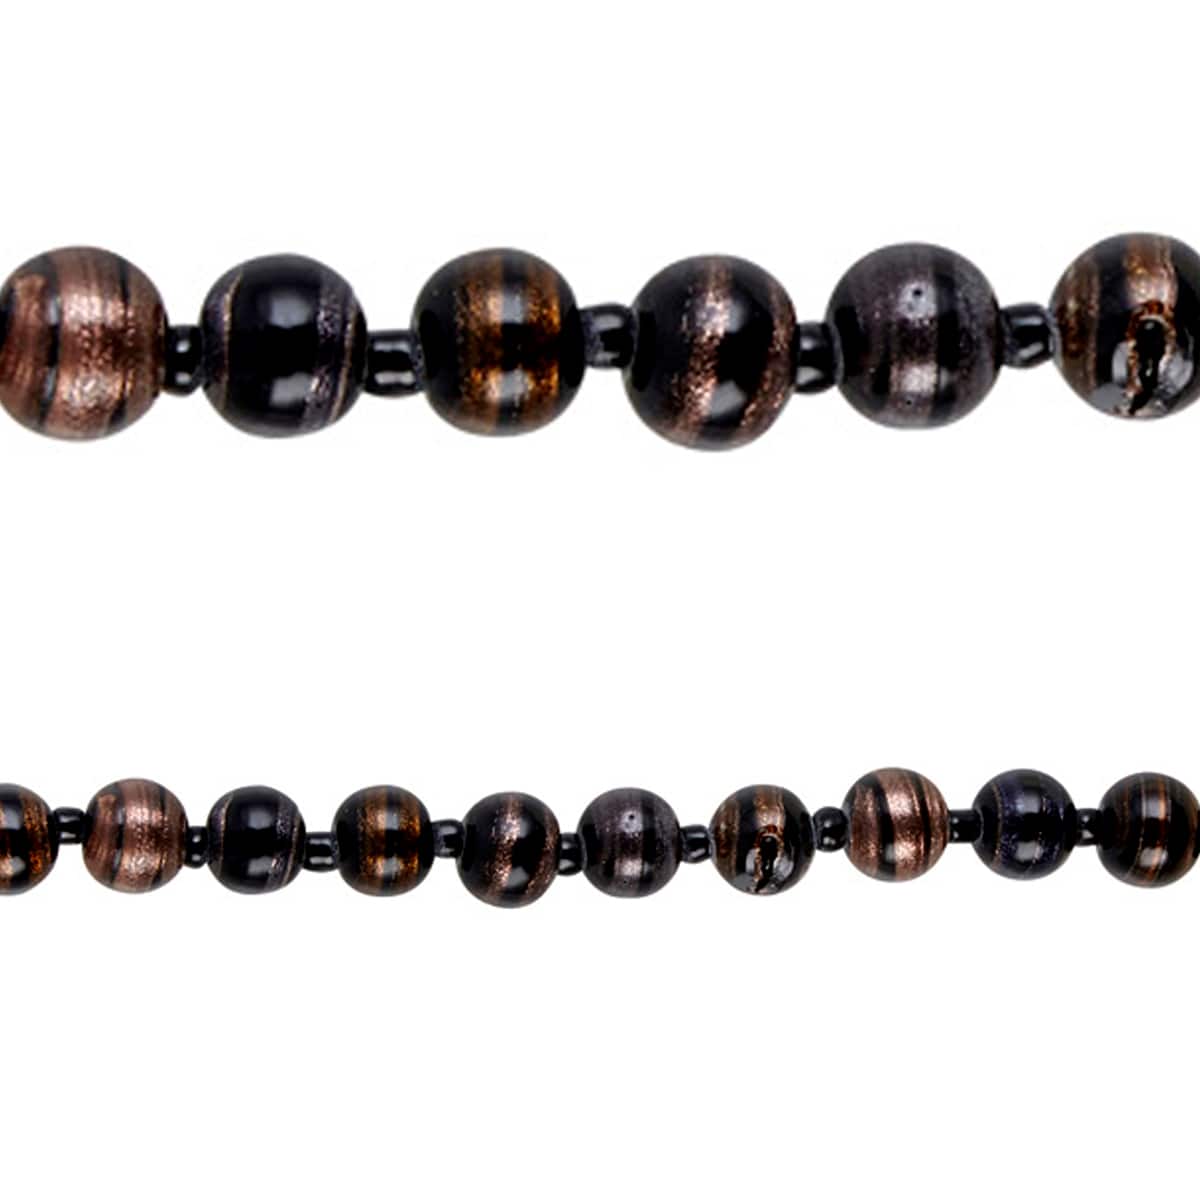 Fashion woman glass crystal beads stone pendant Necklace 10mm bracelet gift set 